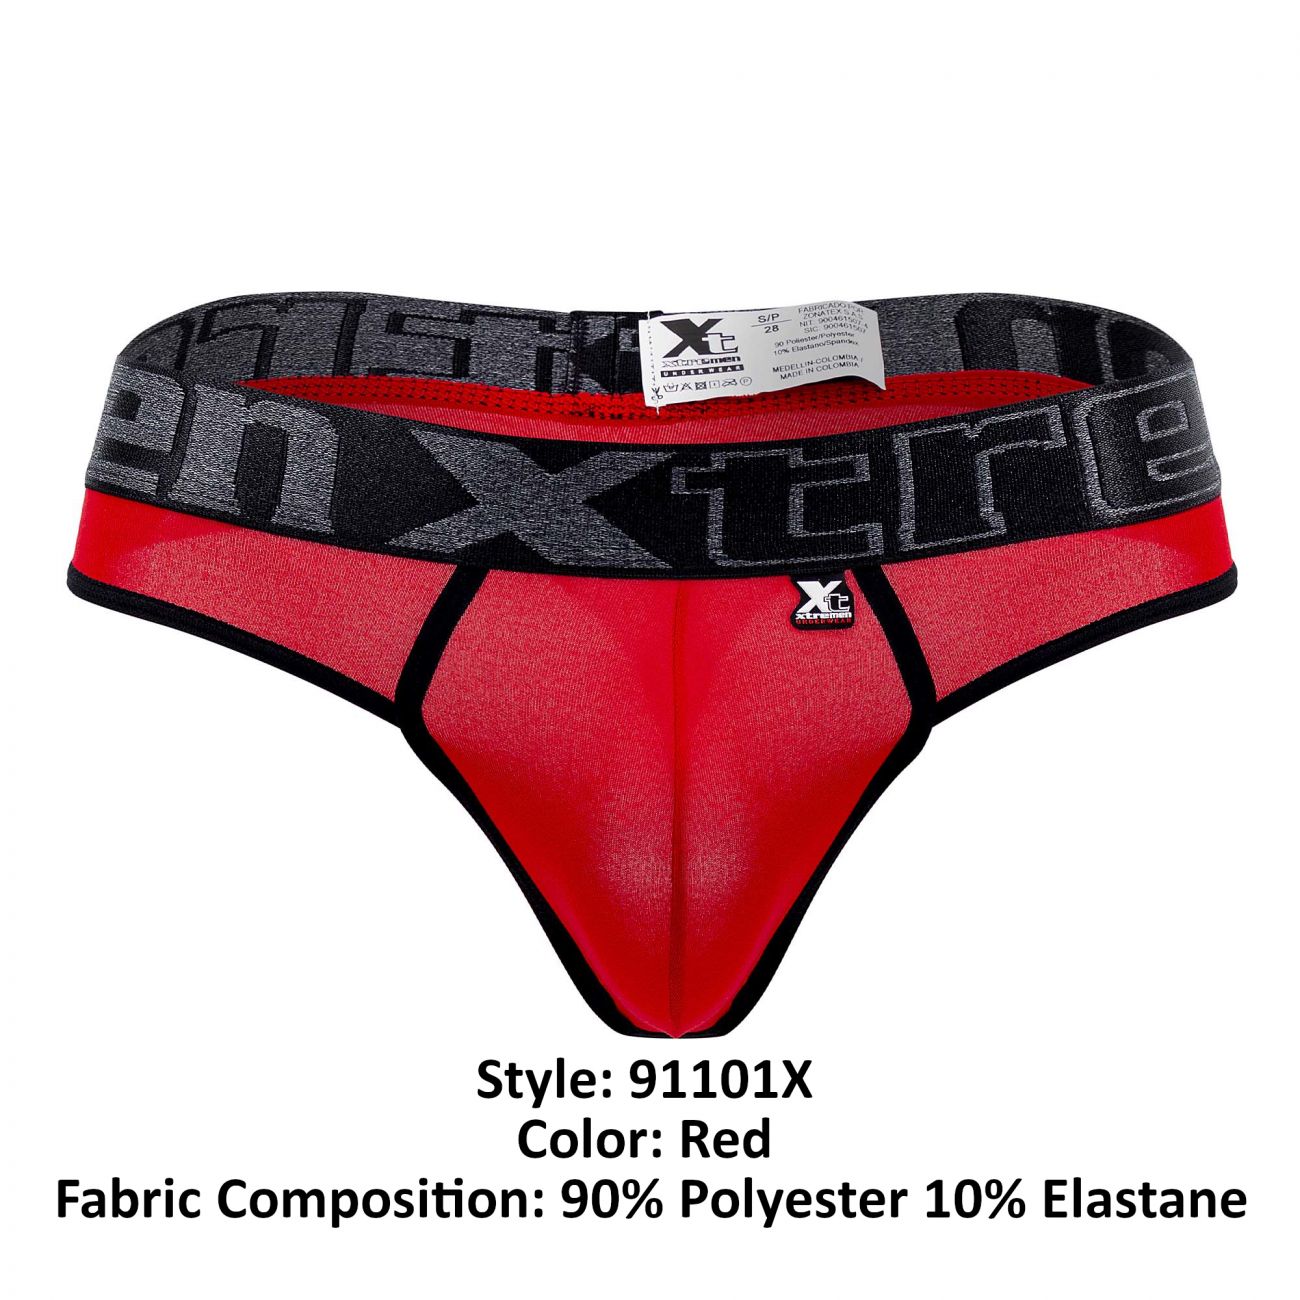 Xtremen 91101X Microfiber Thongs Red Plus Sizes